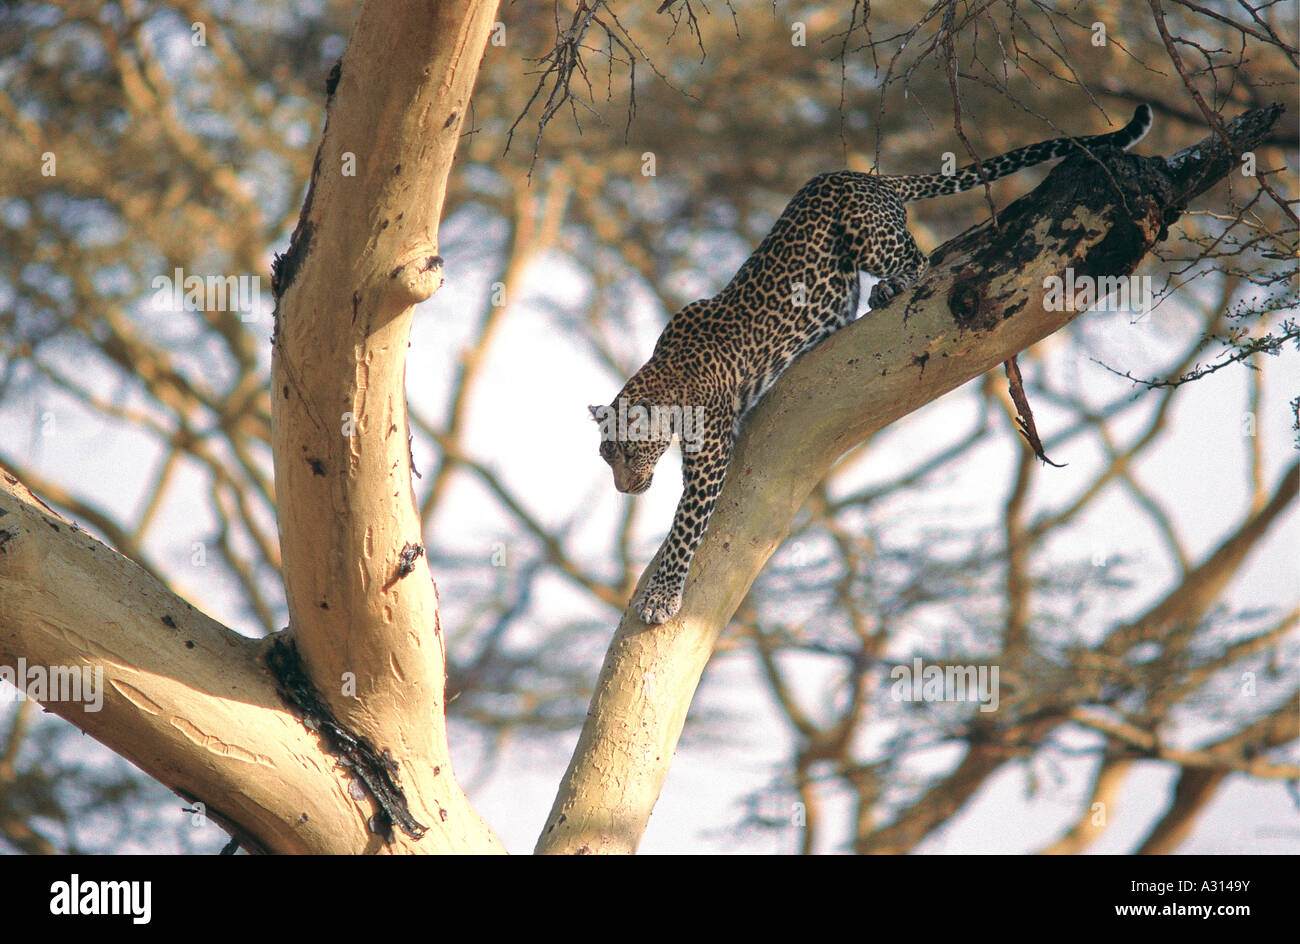 Leopard descending Yellow barked Acacia tree in Serengeti National Park Tanzania Stock Photo